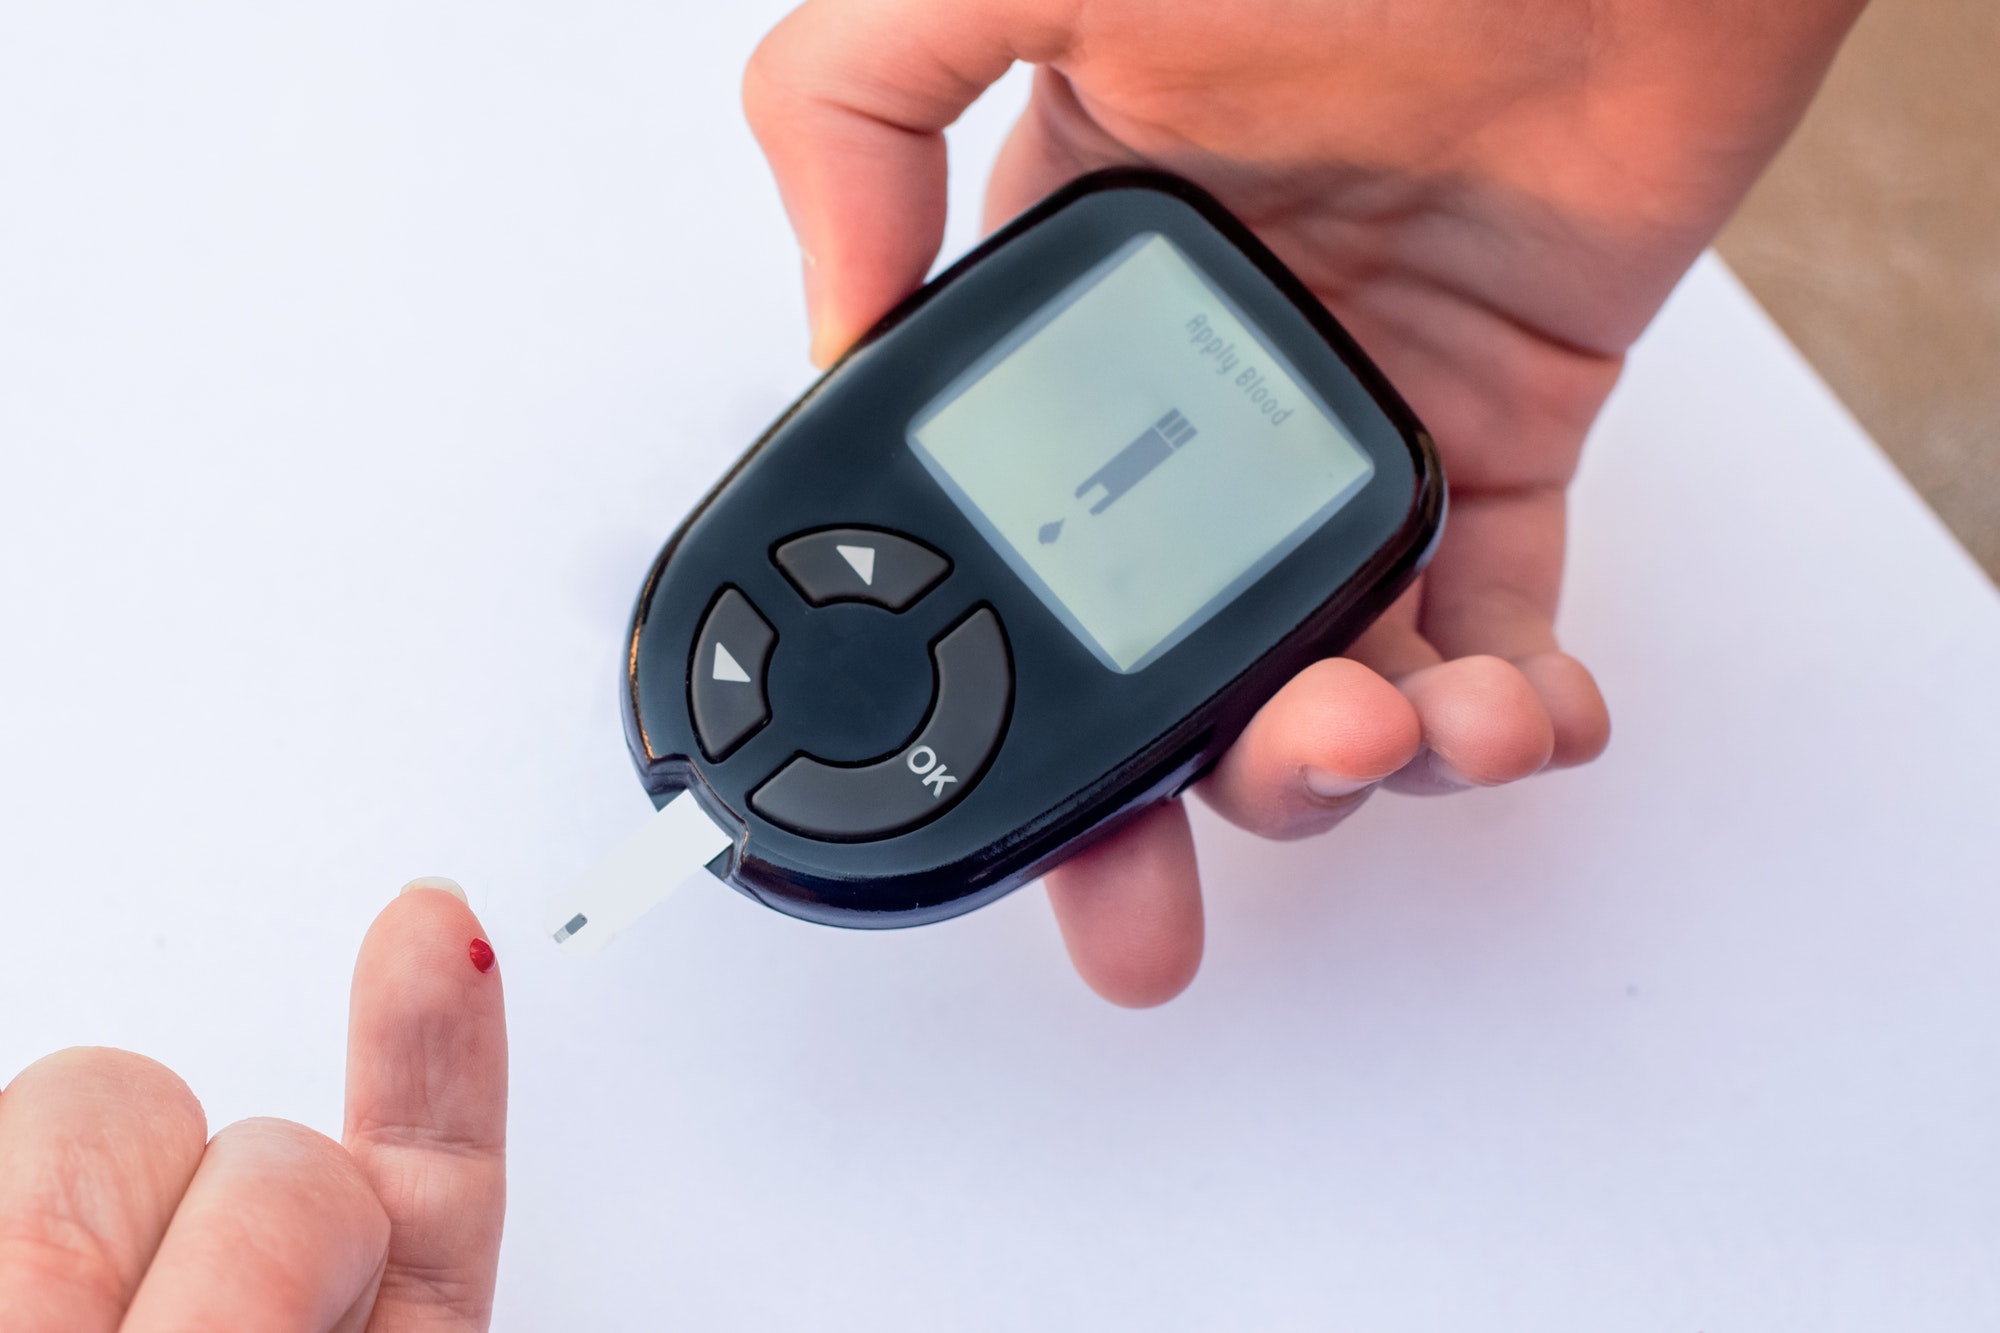 Blood sugar test with glucose meter. Diabetes